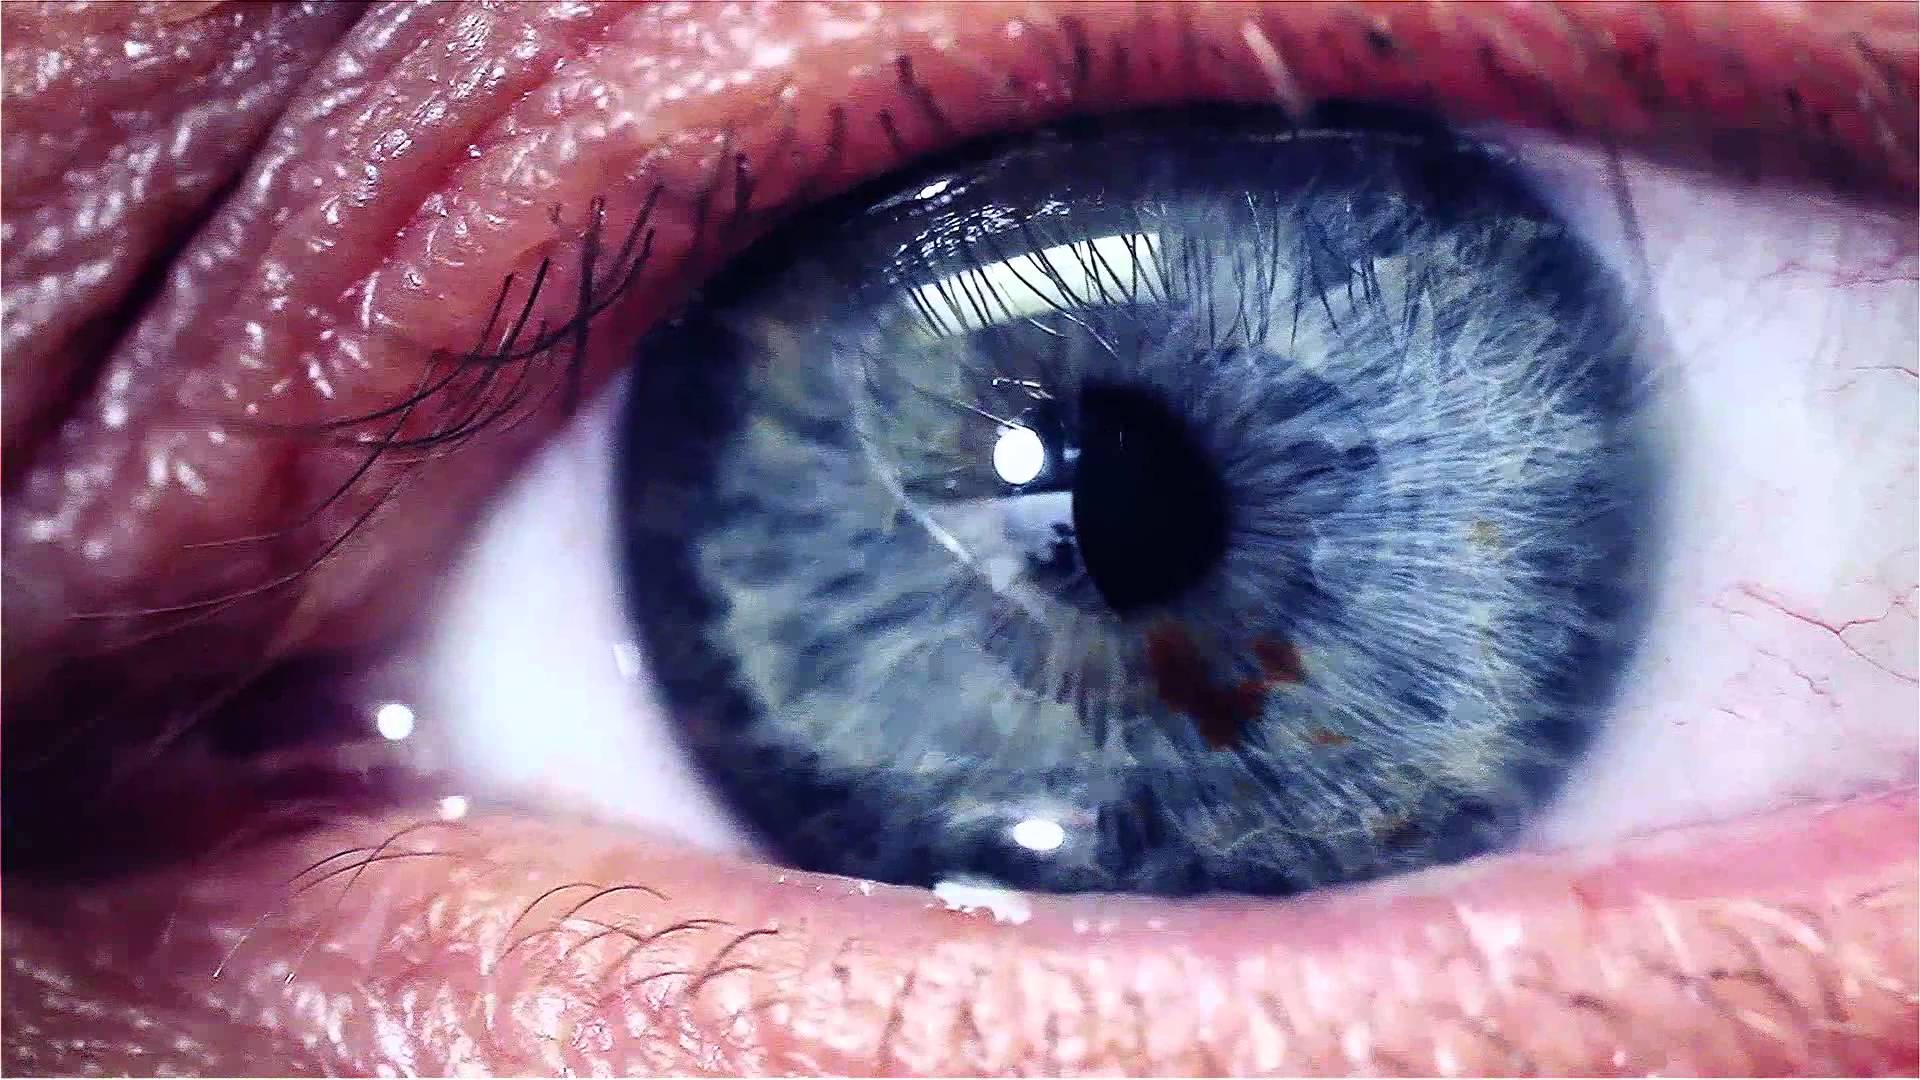 The Human Eye in Macro - Tear forming - YouTube